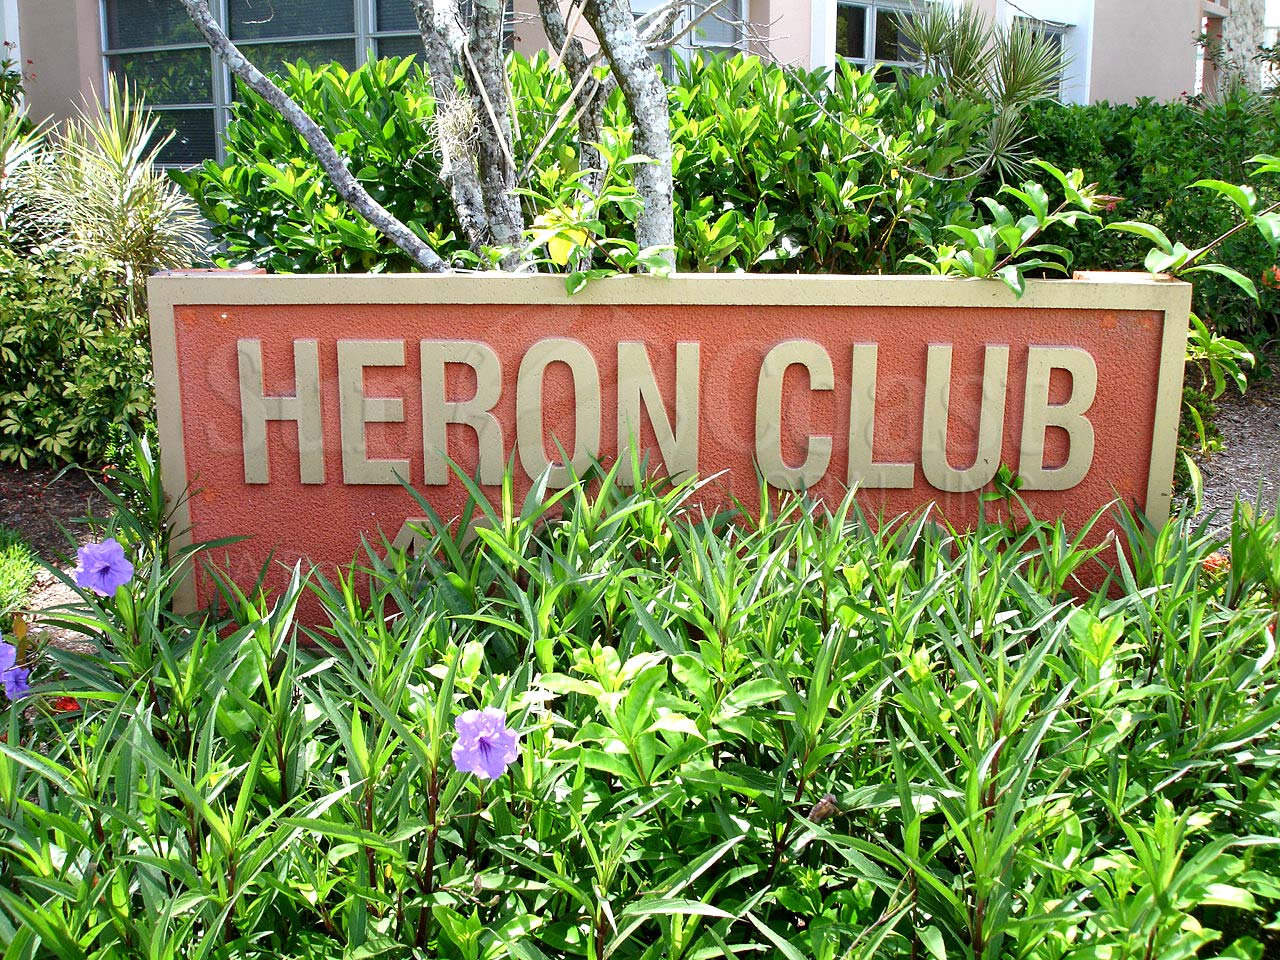 Heron Club Signage